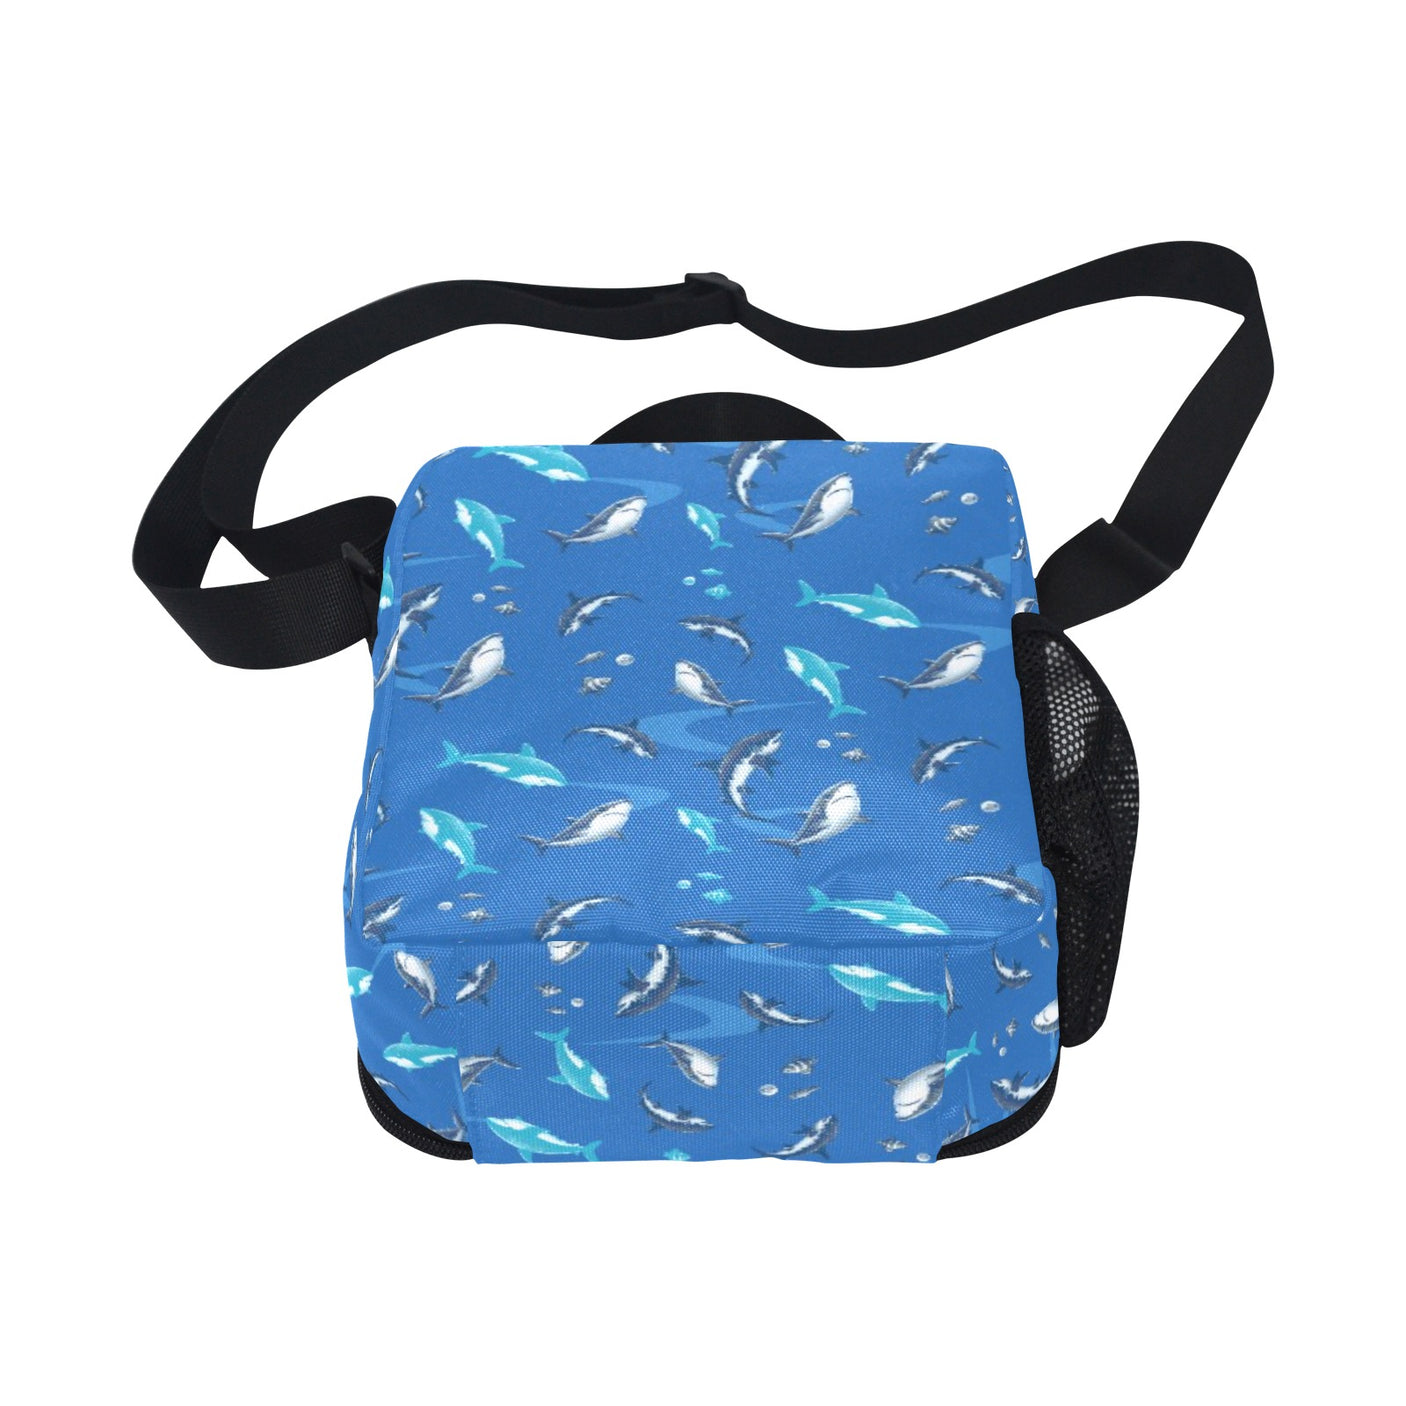 Shark Lunch Box Bag